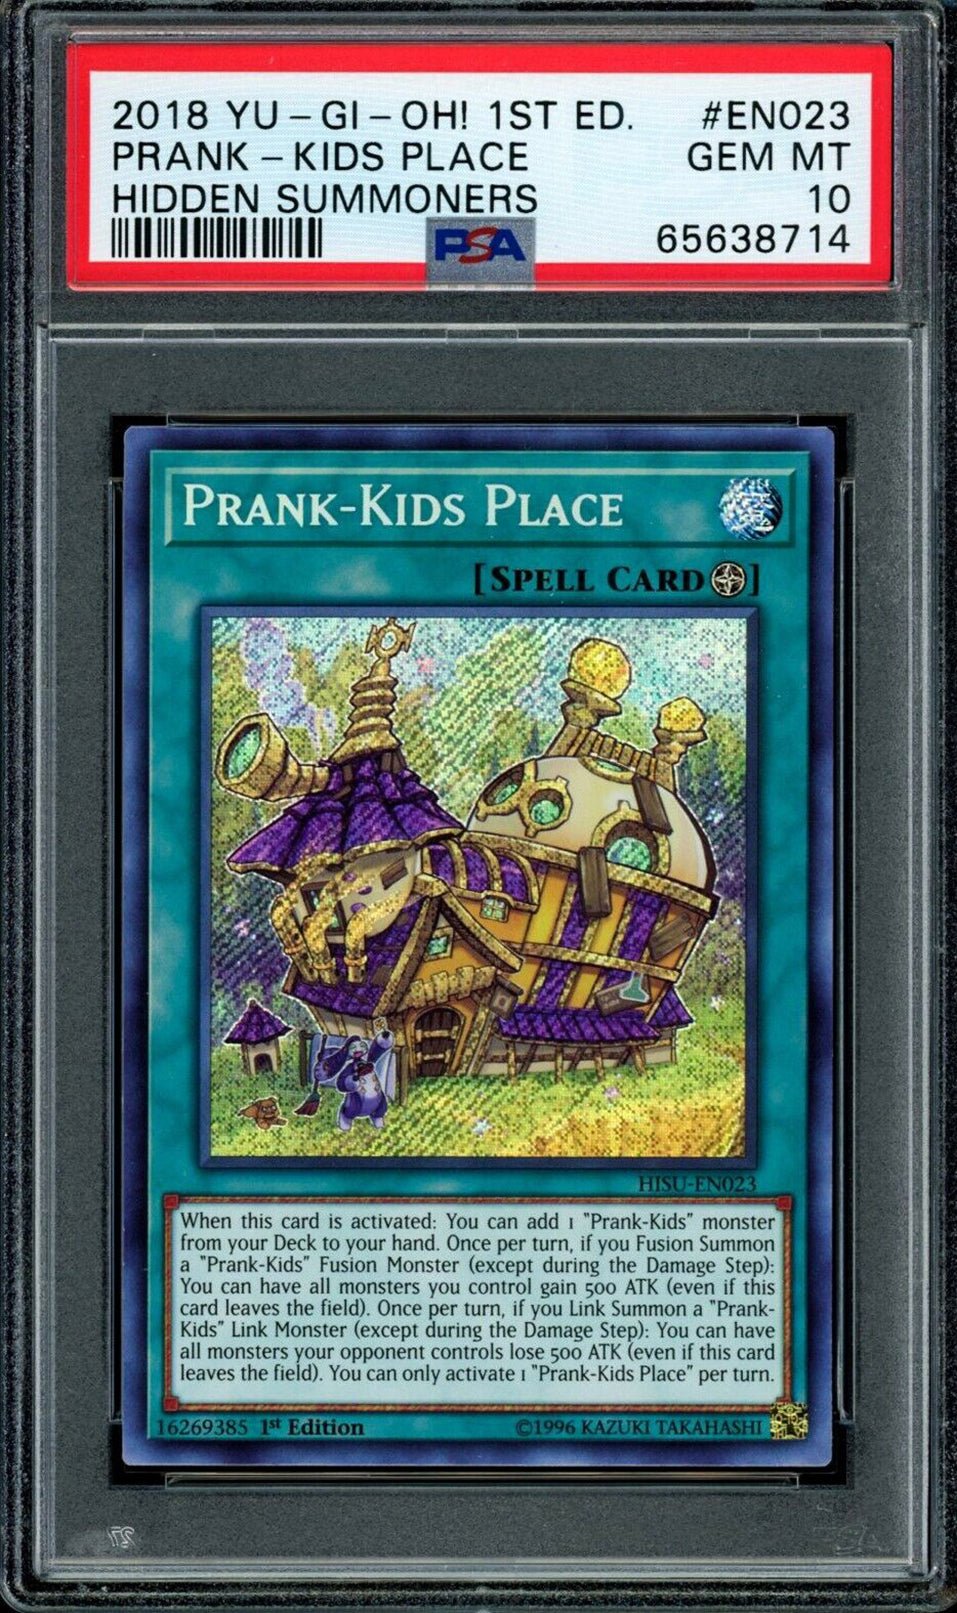 PRANK-KIDS PLACE HISU-EN023 Secret Rare PSA 10 2018 Hidden Summoners 1st Edition C2 Yu-Gi-Oh Base Graded Cards - Hobby Gems